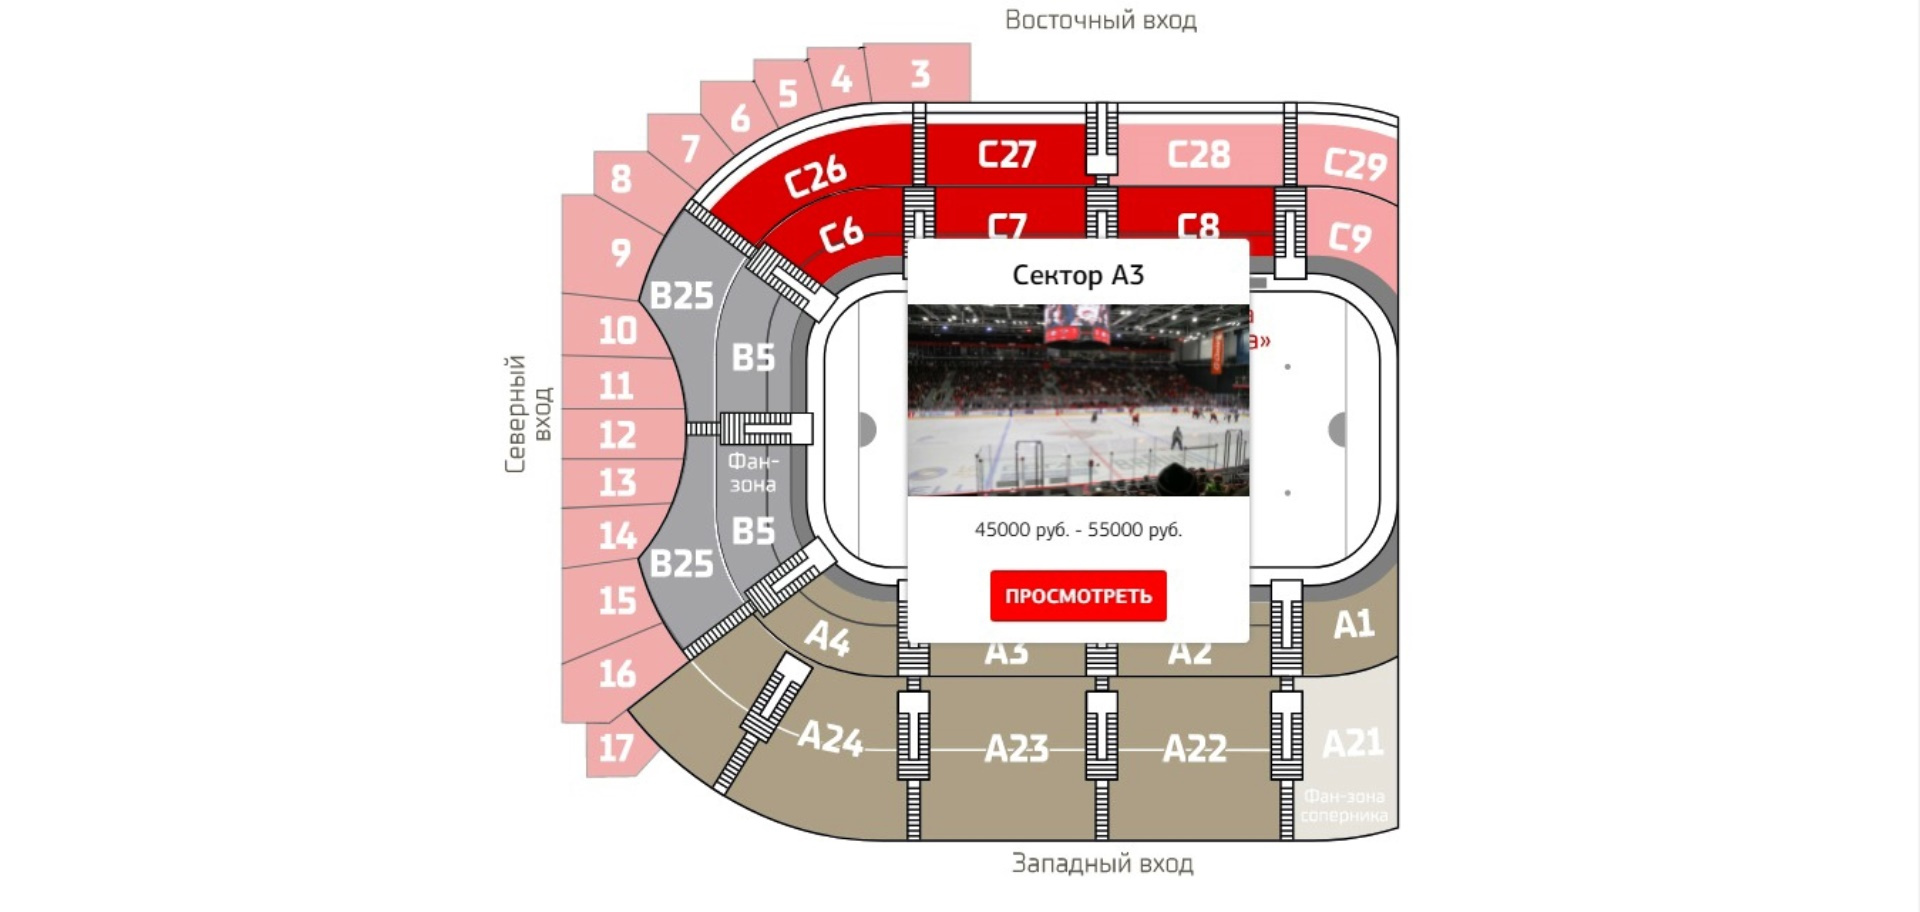 Купить билеты на хоккей 2023. Билеты на хоккей. Авангард билеты на хоккей. Билеты хк Авангард. Билеты на хоккей Омск Авангард.